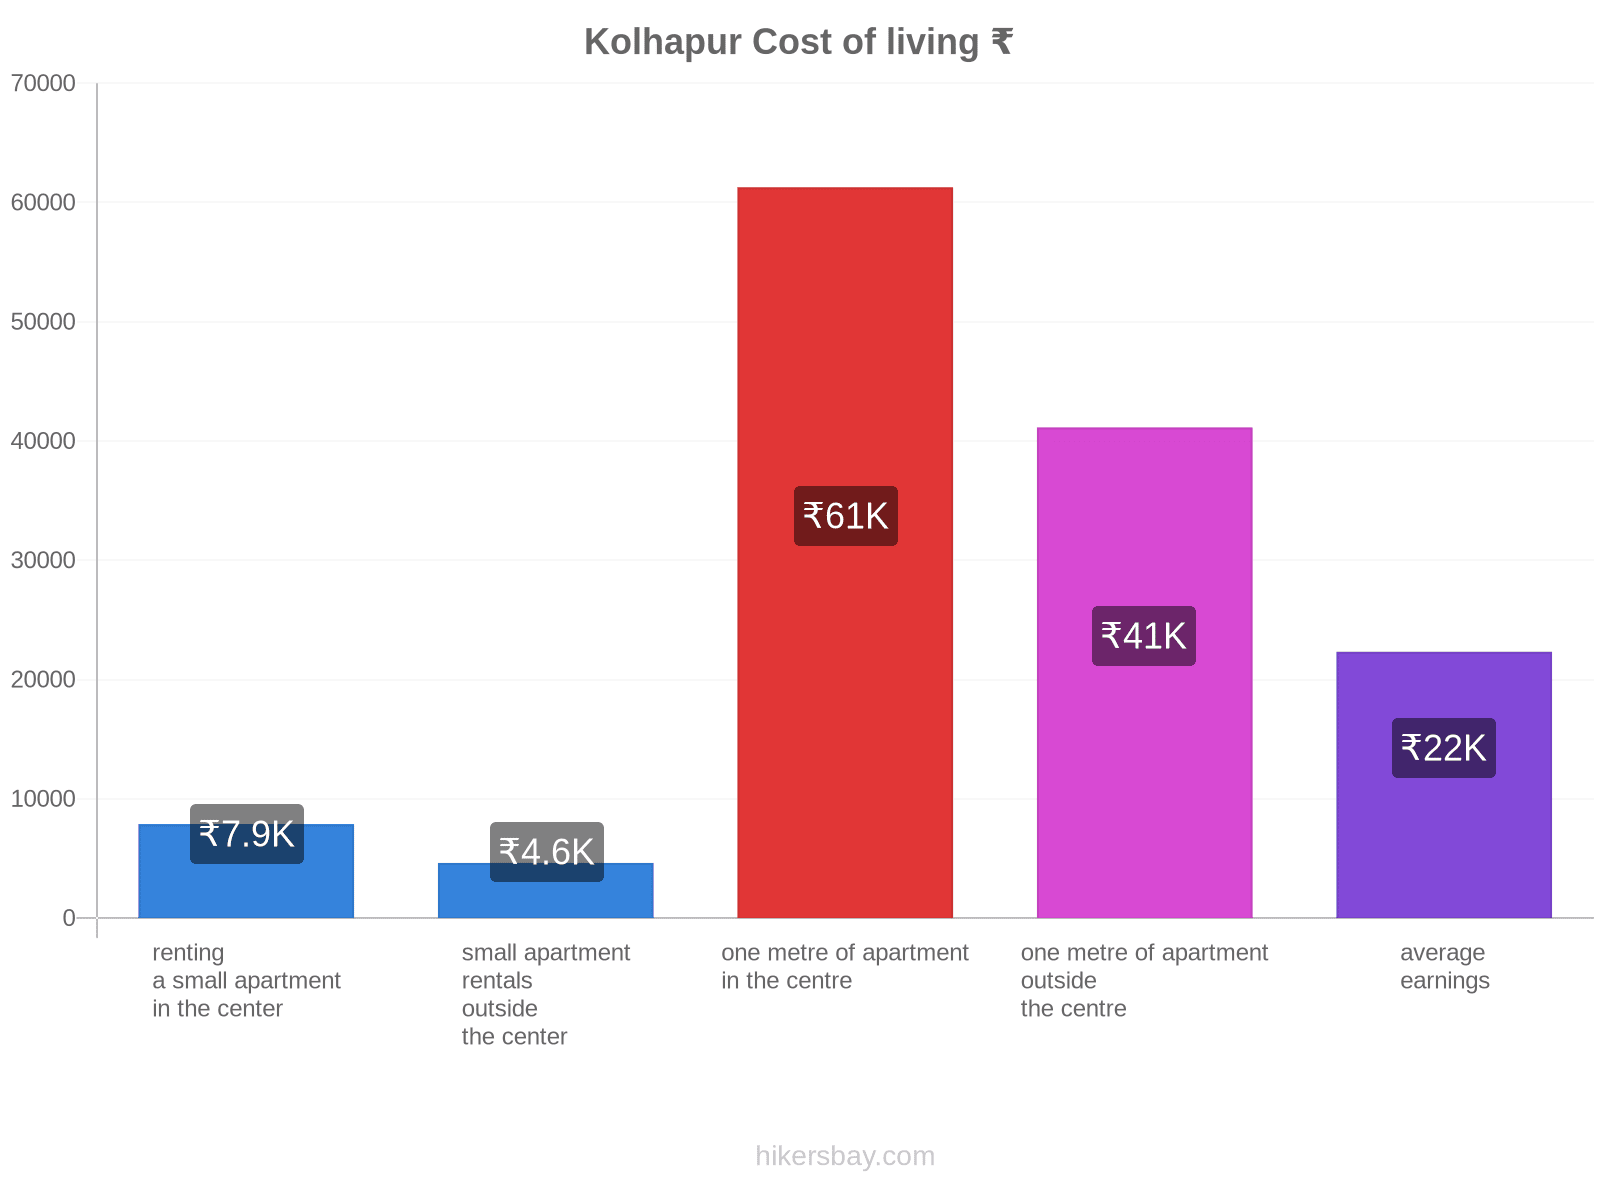 Kolhapur cost of living hikersbay.com